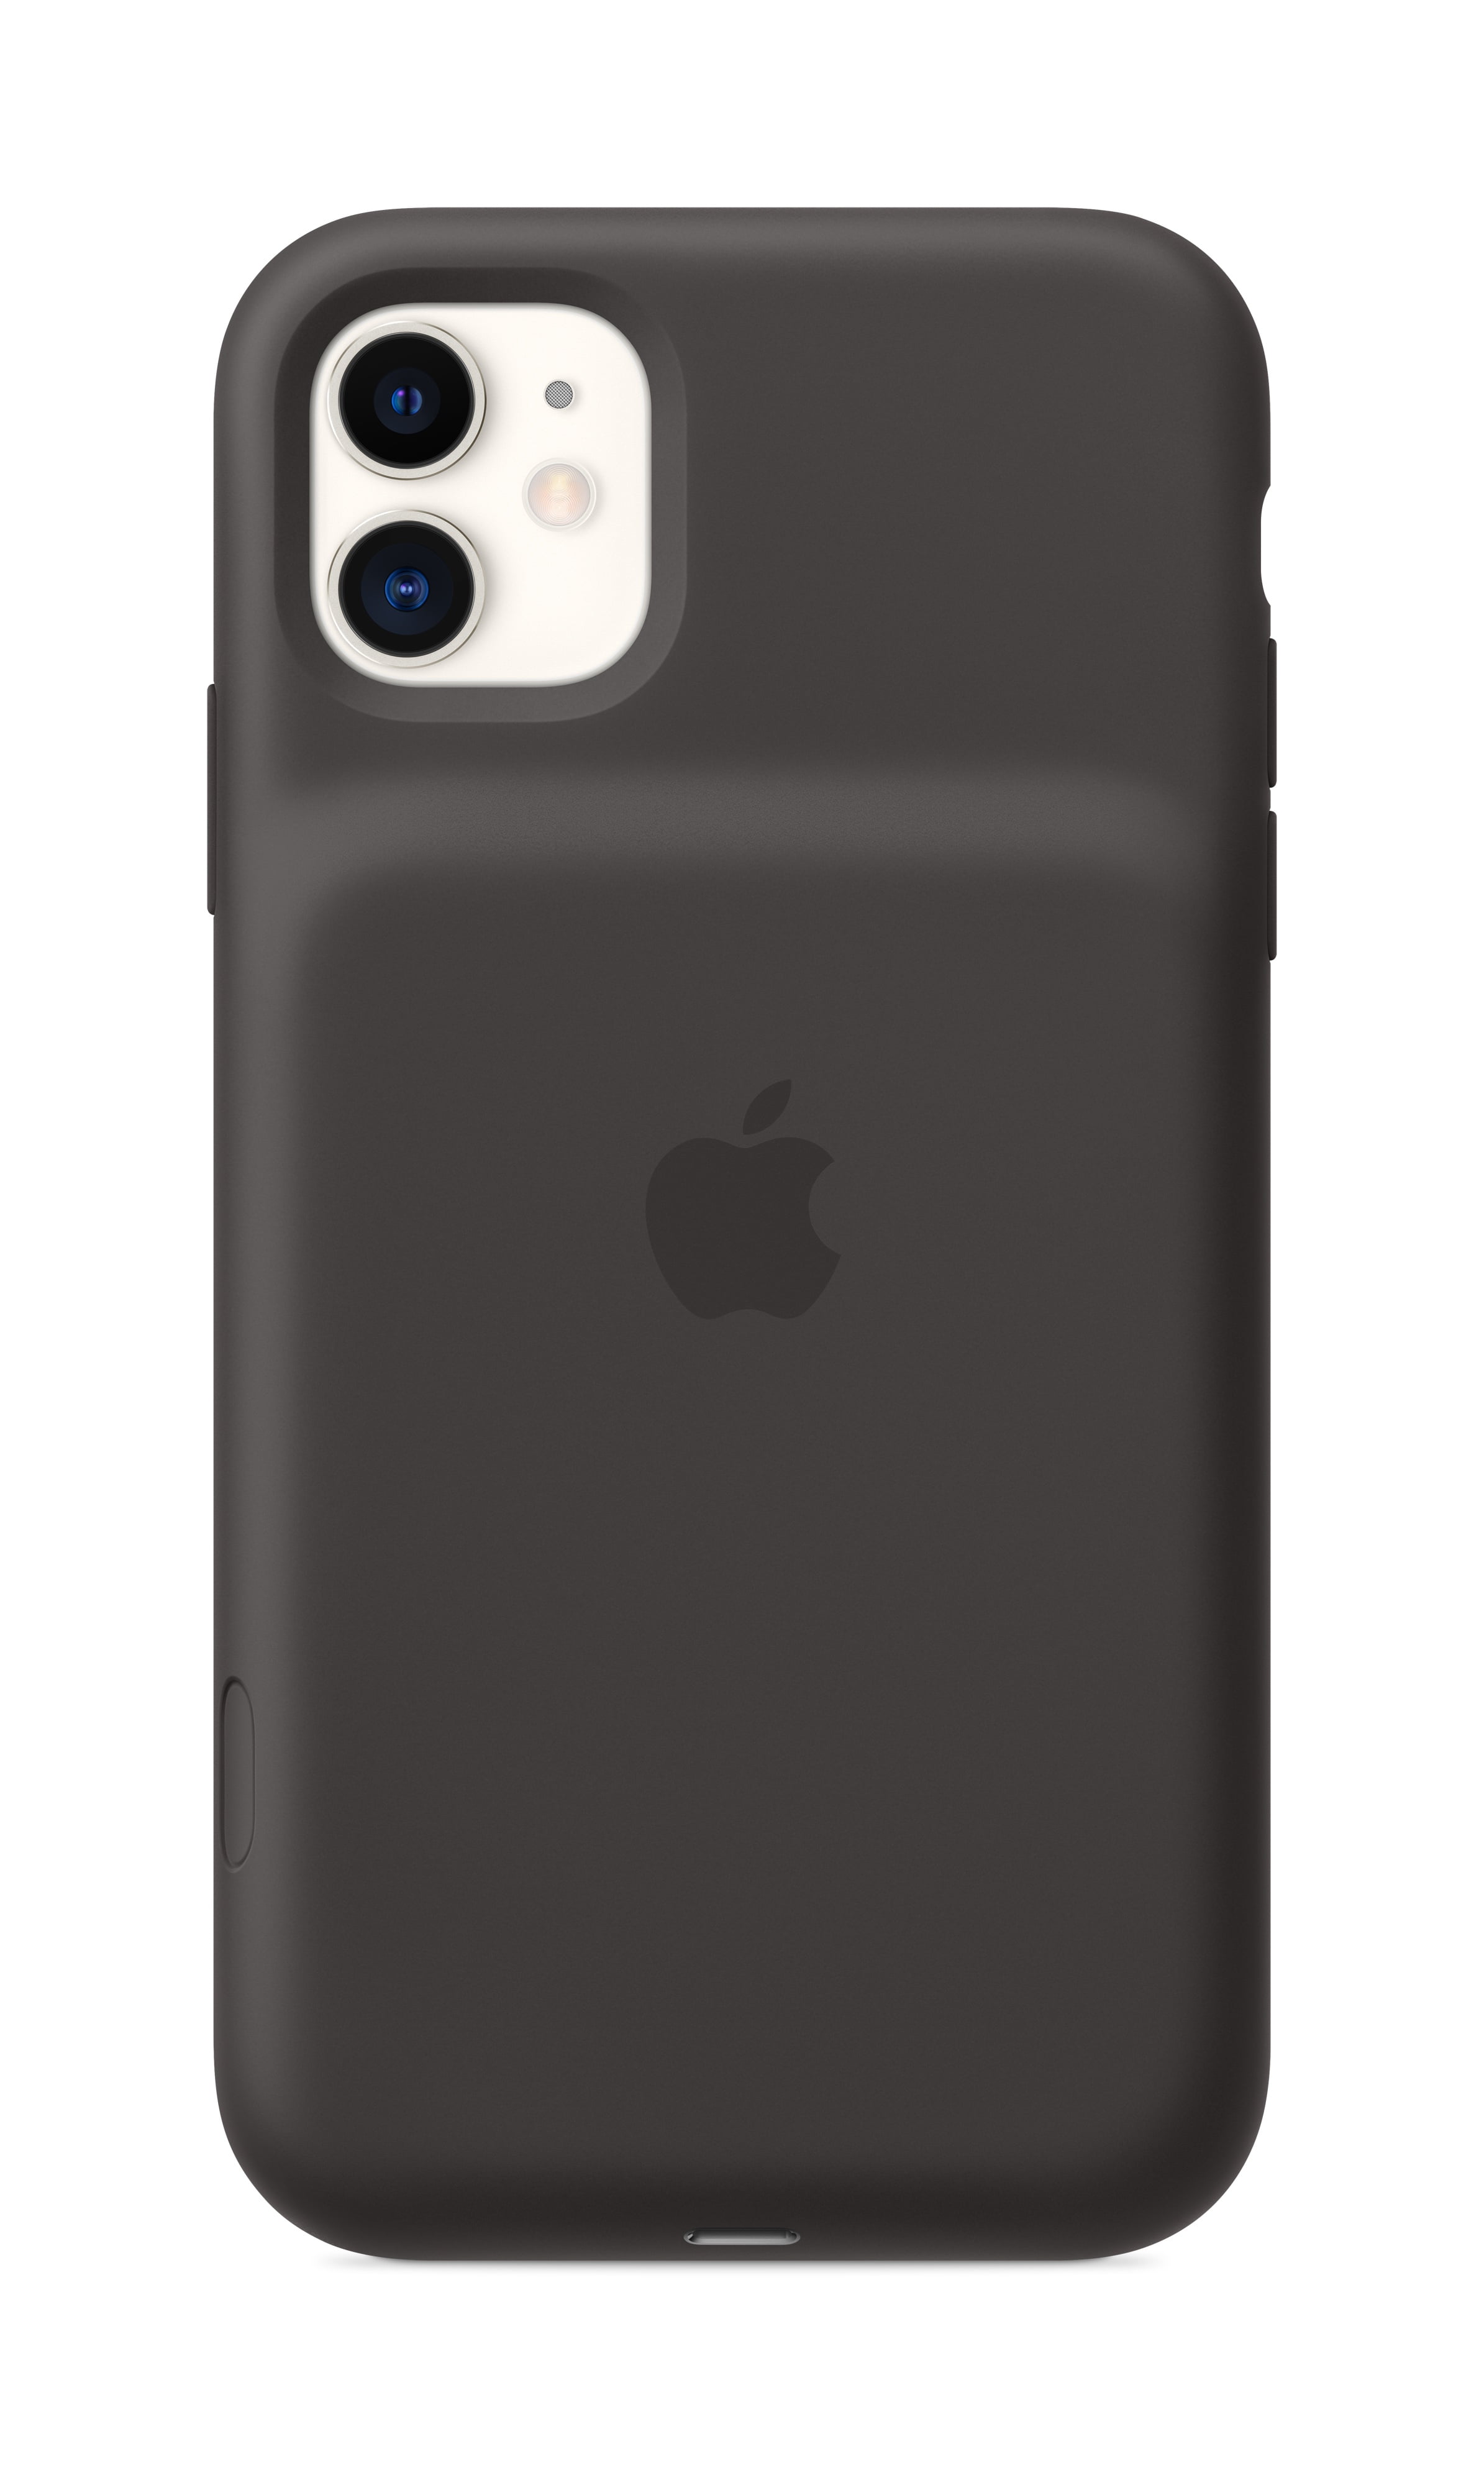 iPhone 11 Smart Battery Case - Black - Walmart.com